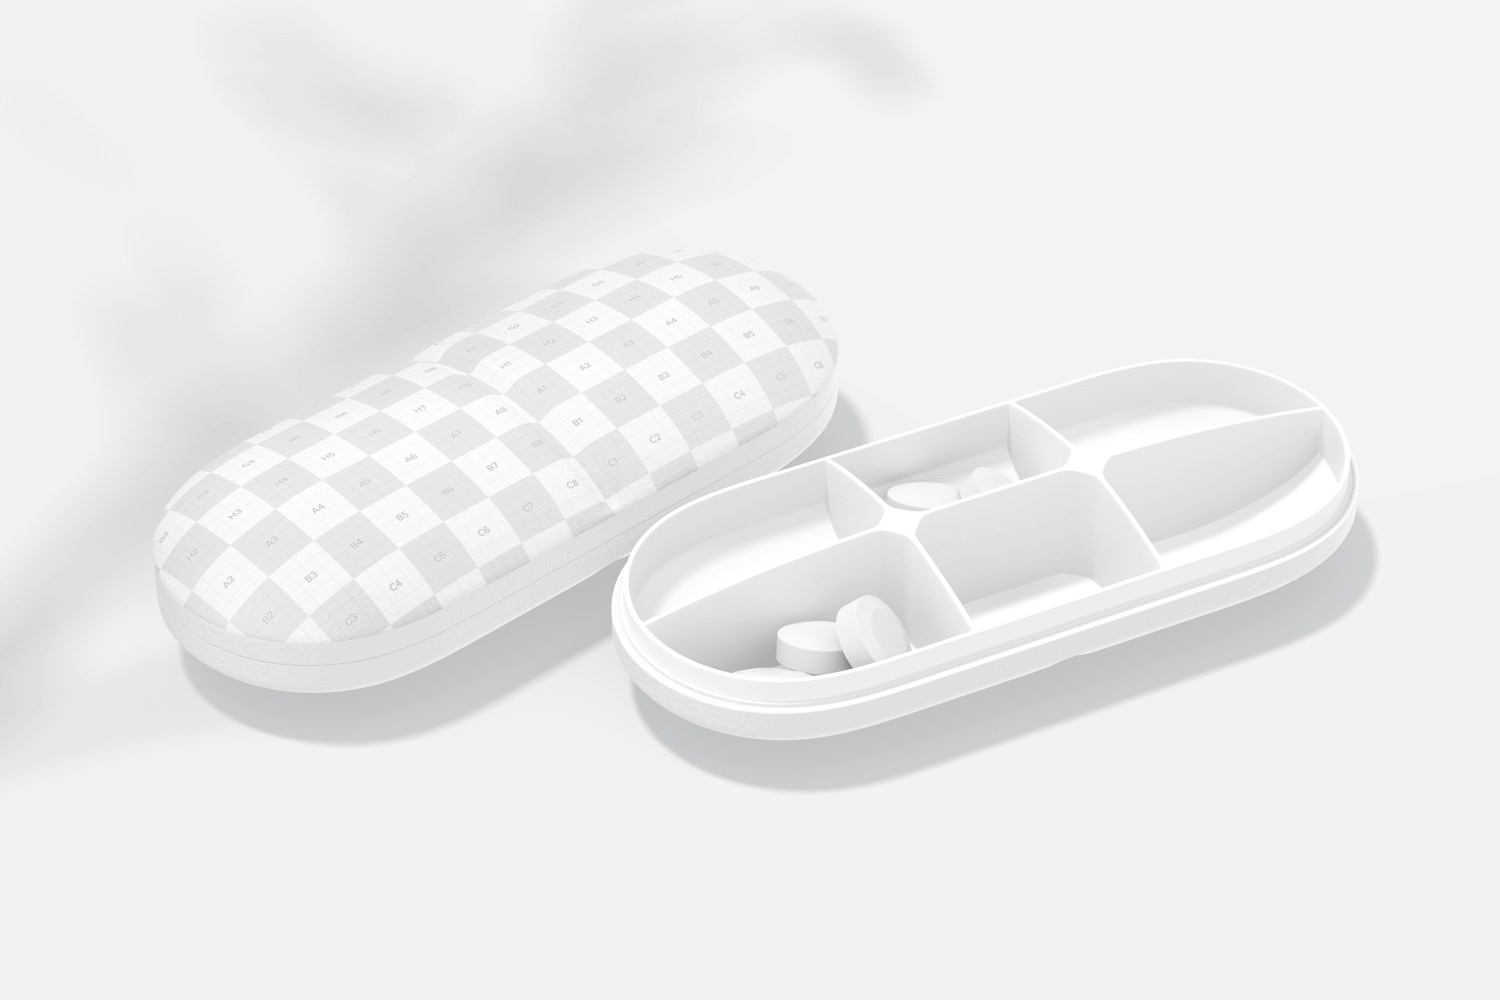 Pill Shaped Pill Box Mockup, Perspective View